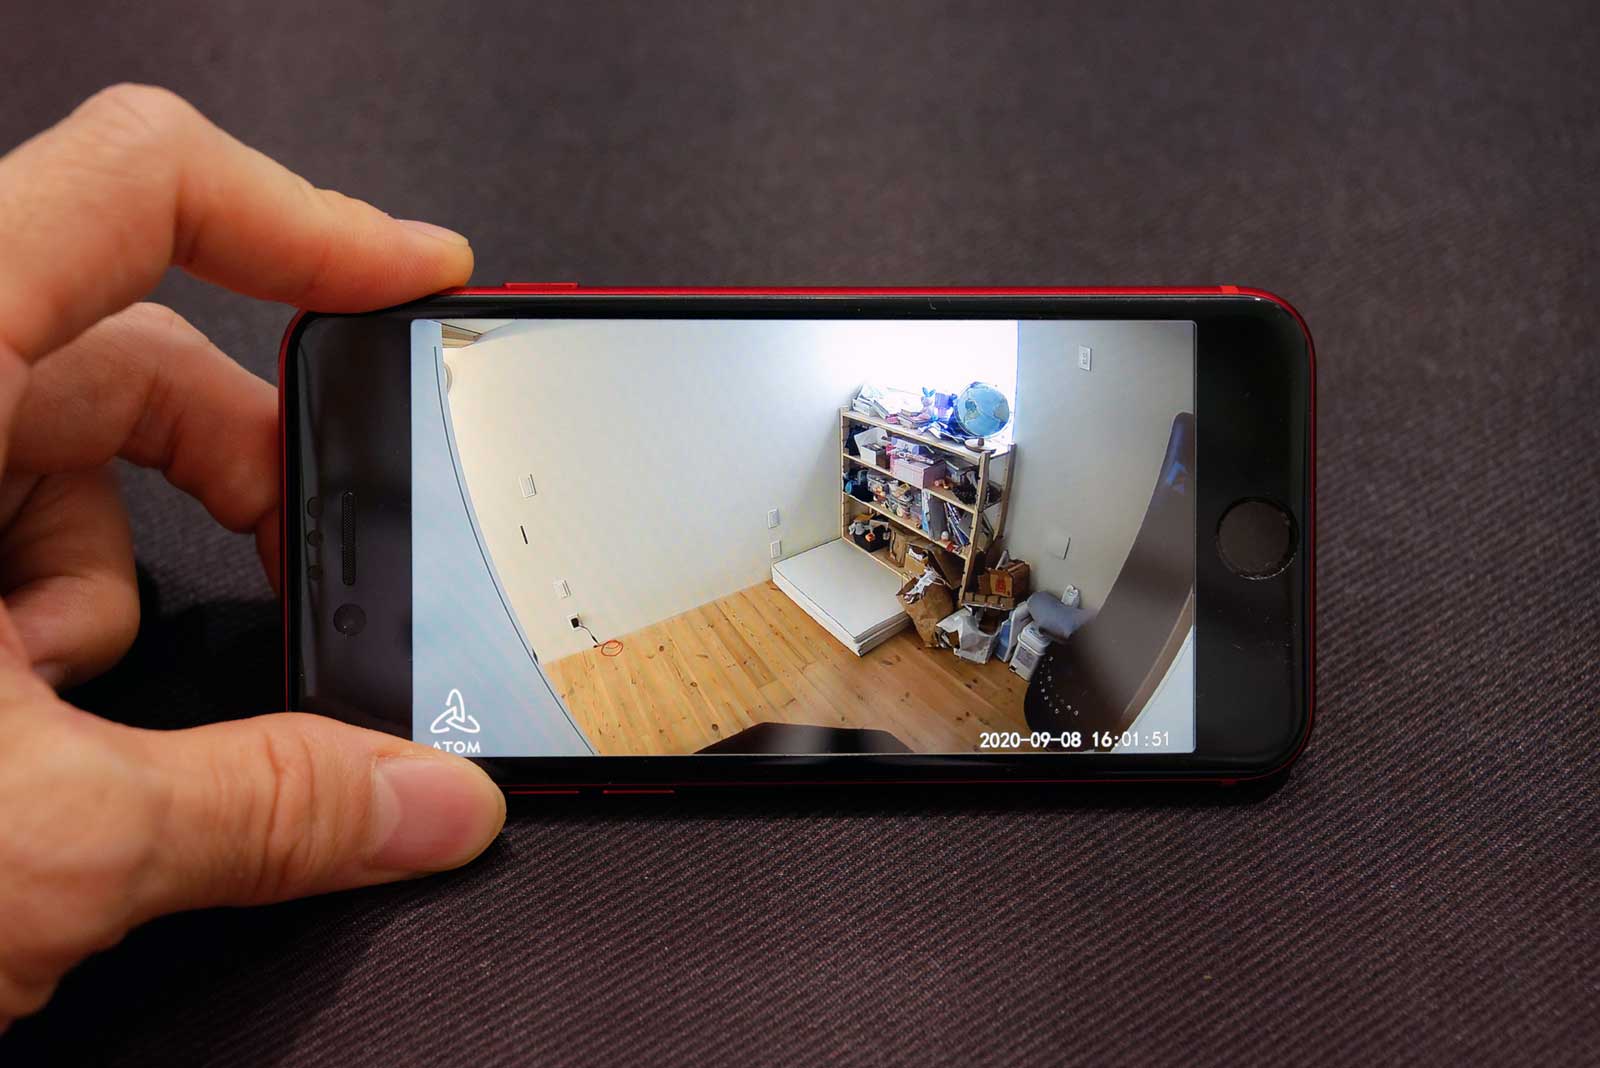 ATOM Camのアプリ基本操作。映像の確認と複数台のカメラを使いこなす